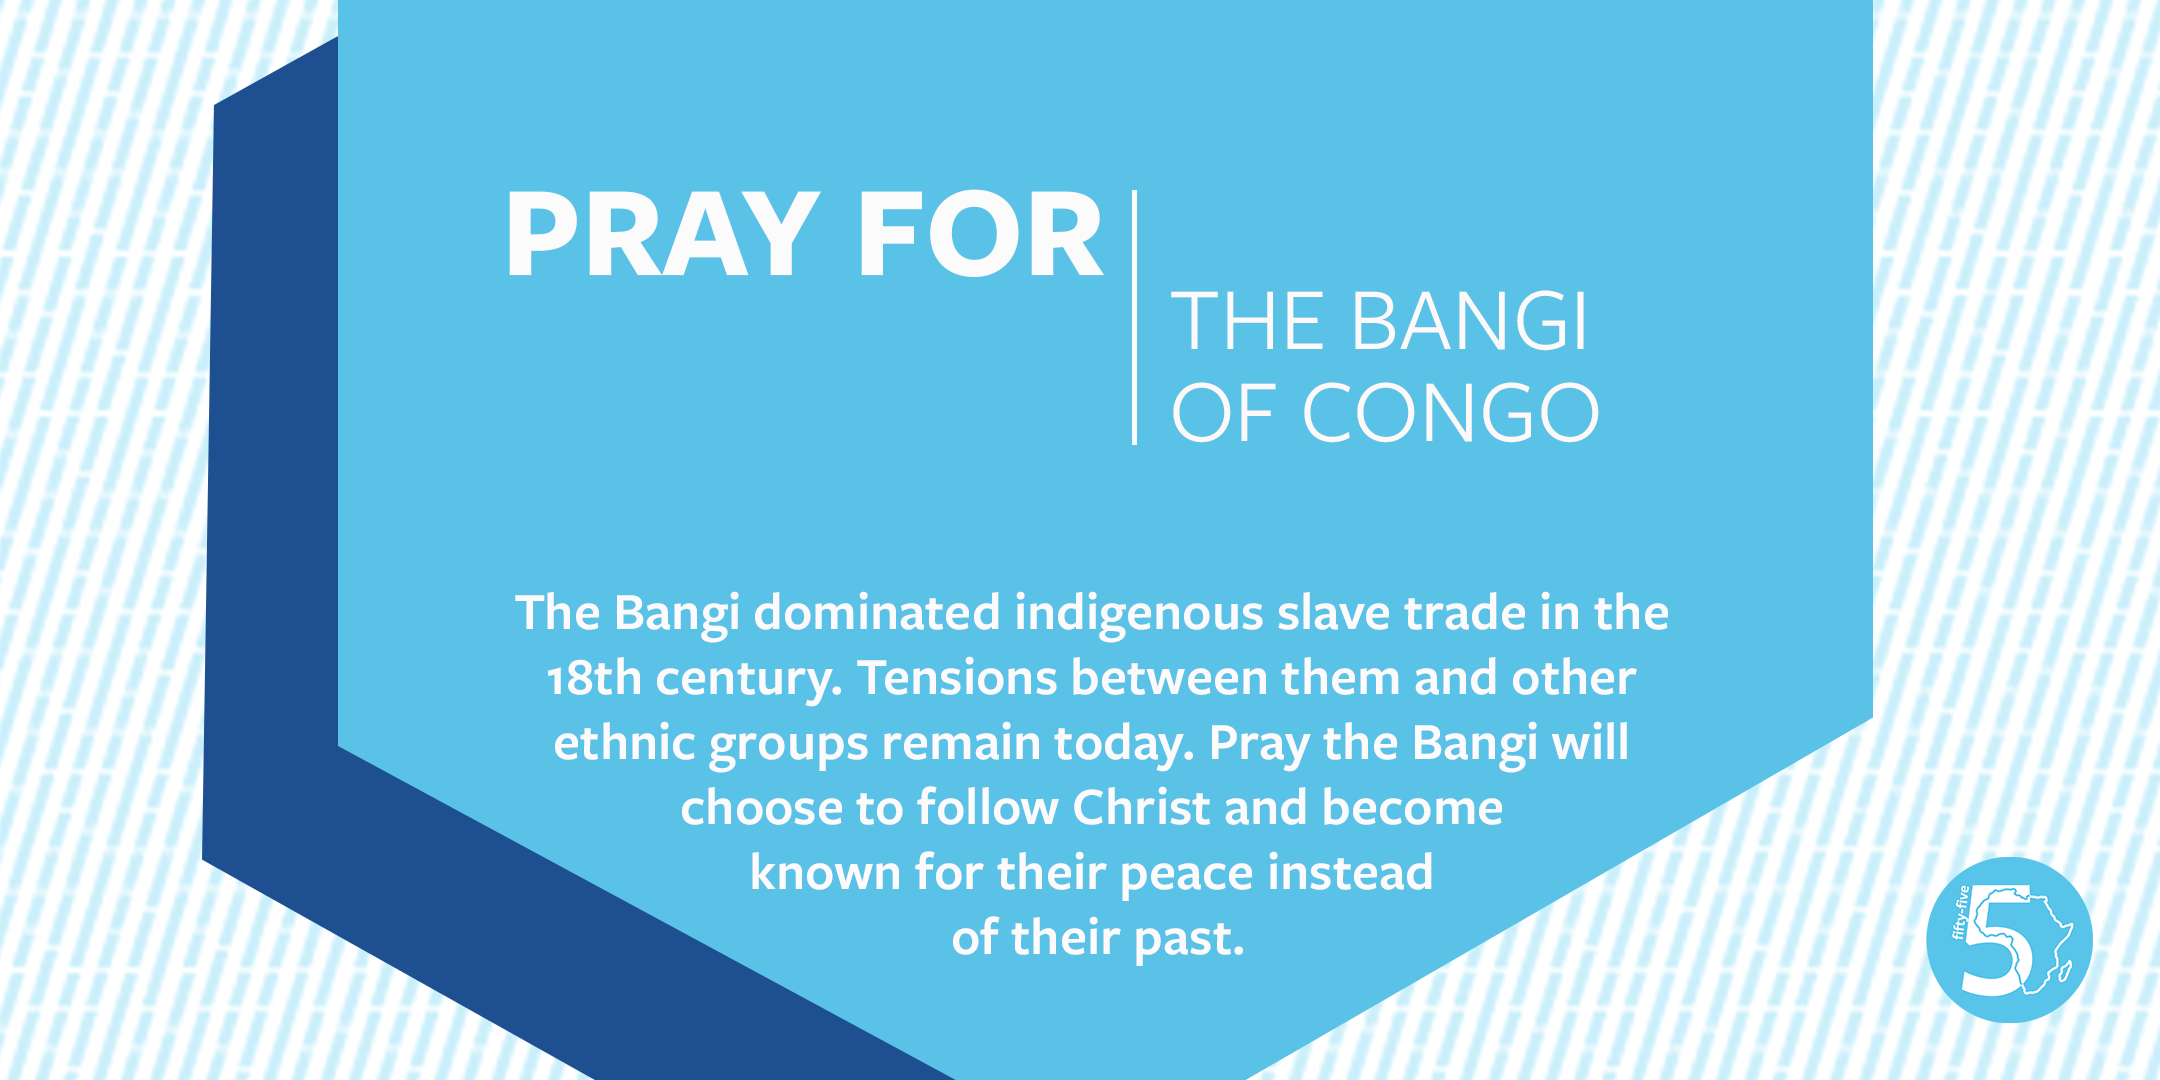  Bangi  of Congo International Mission Board